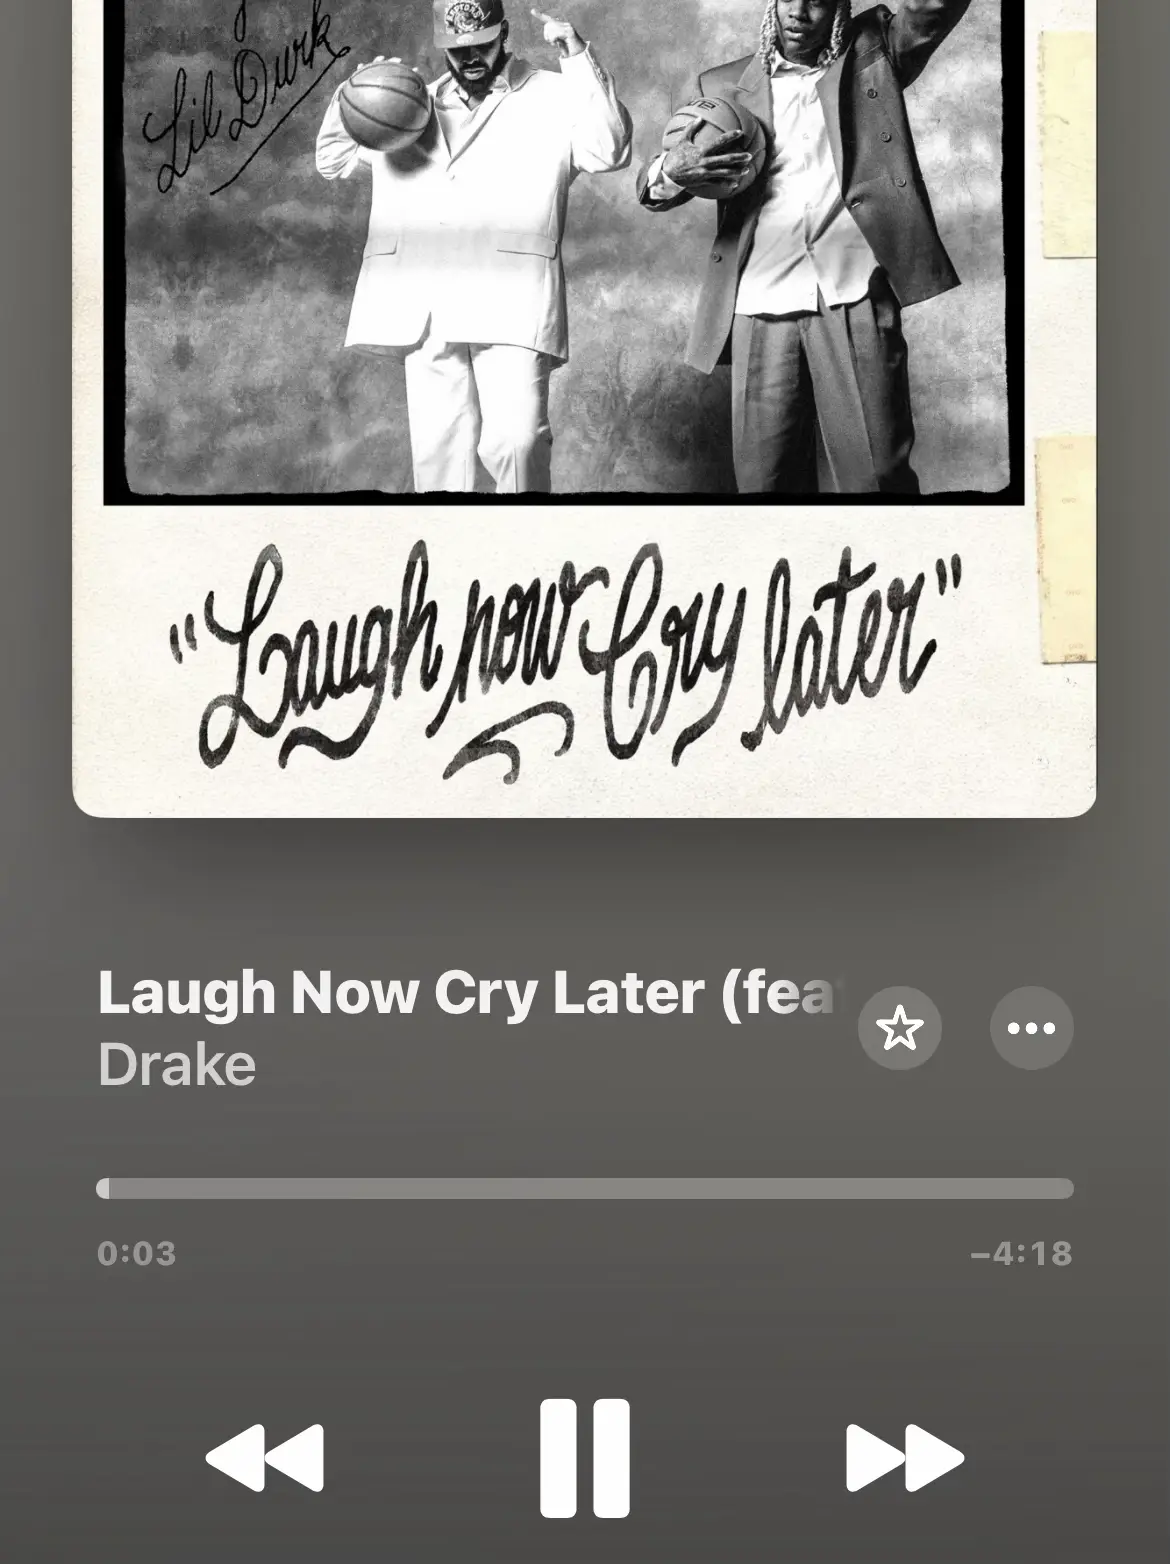 Drake – Laugh Now Cry Later Lyrics